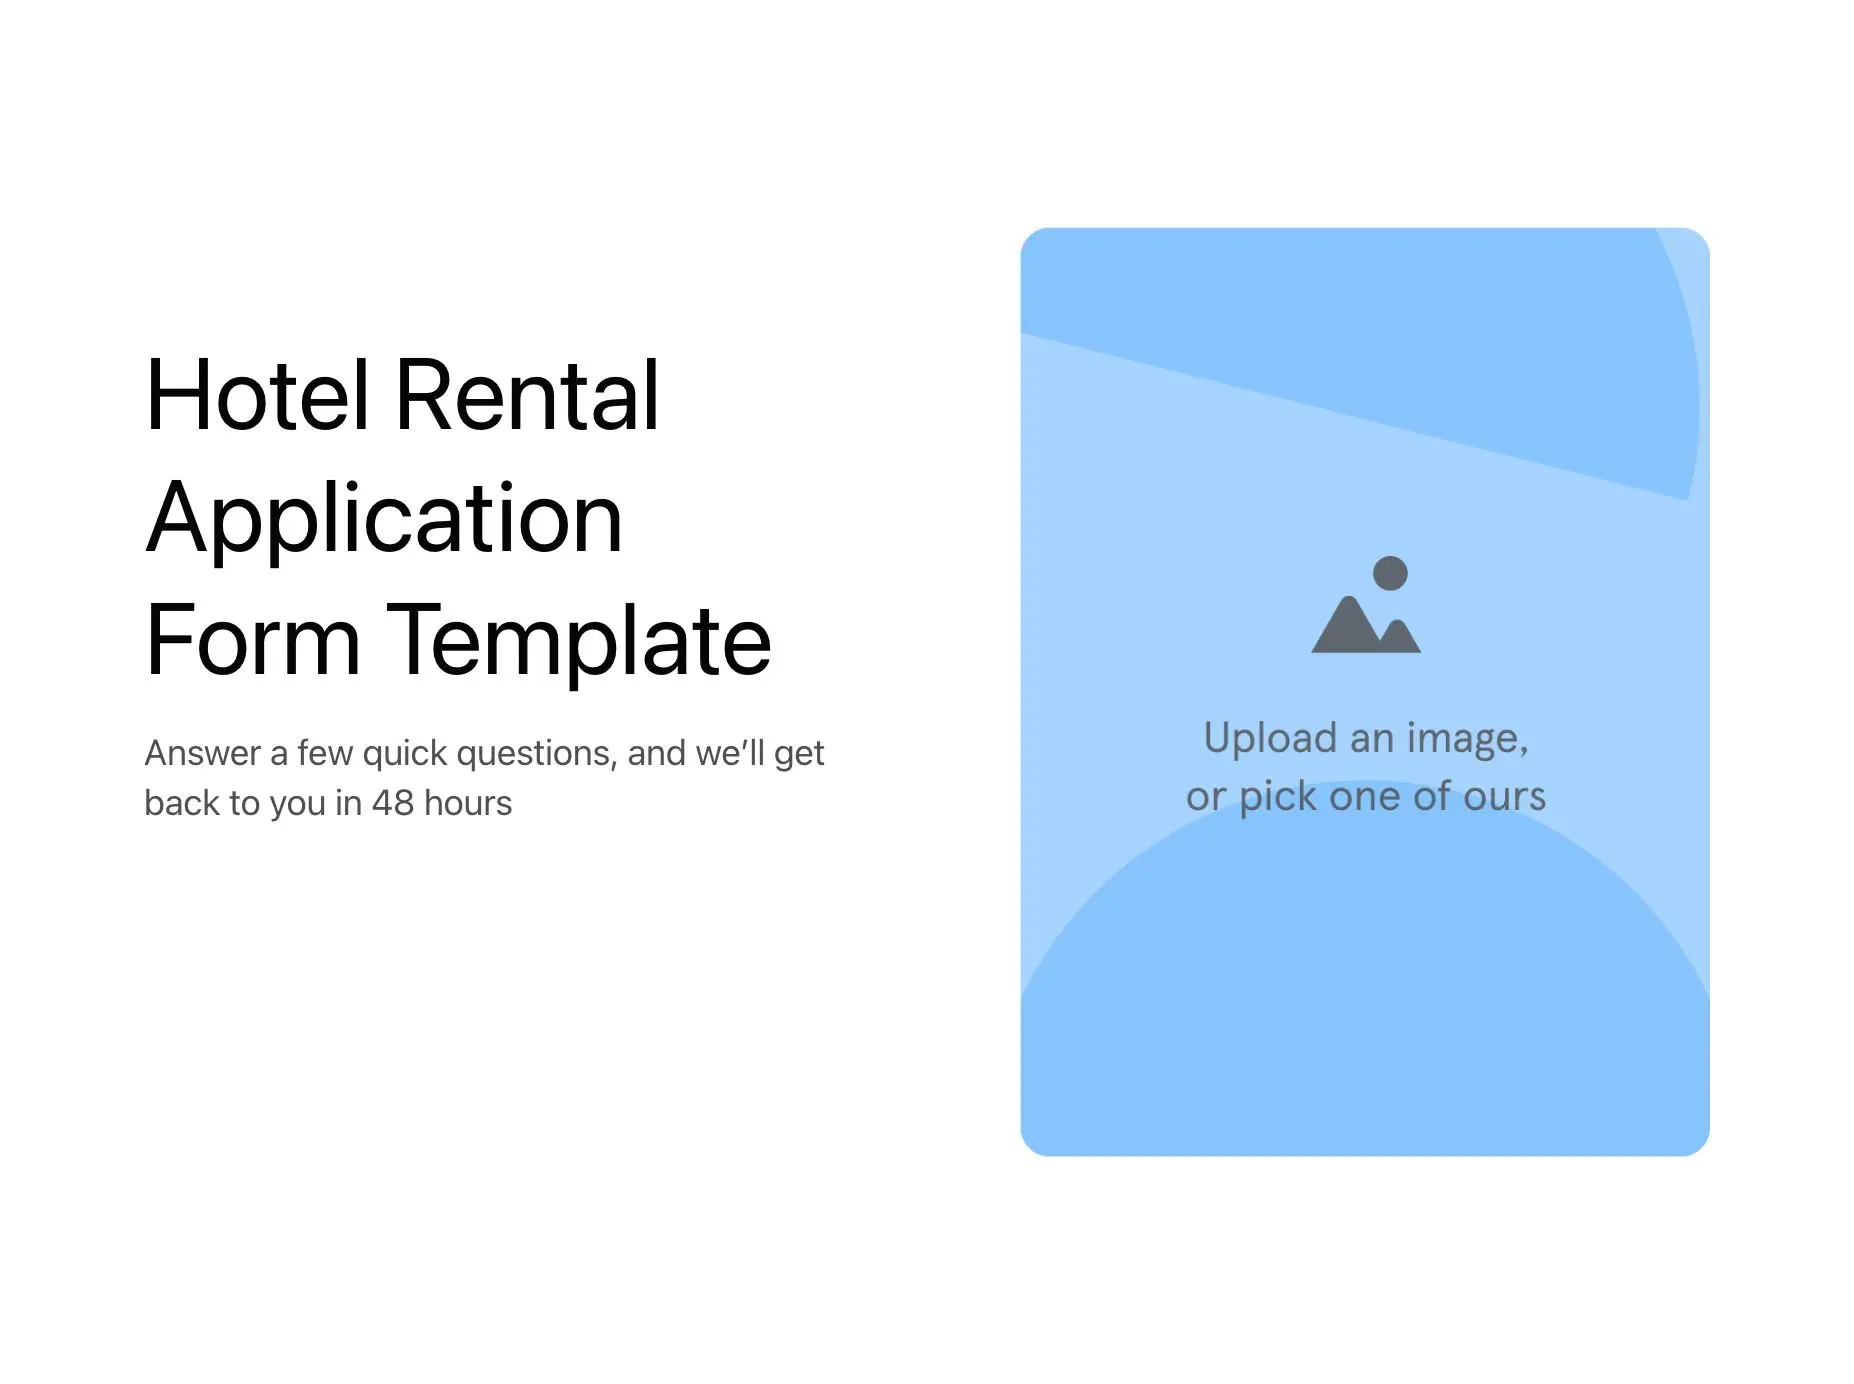 Hotel Rental Application Form Template Hero